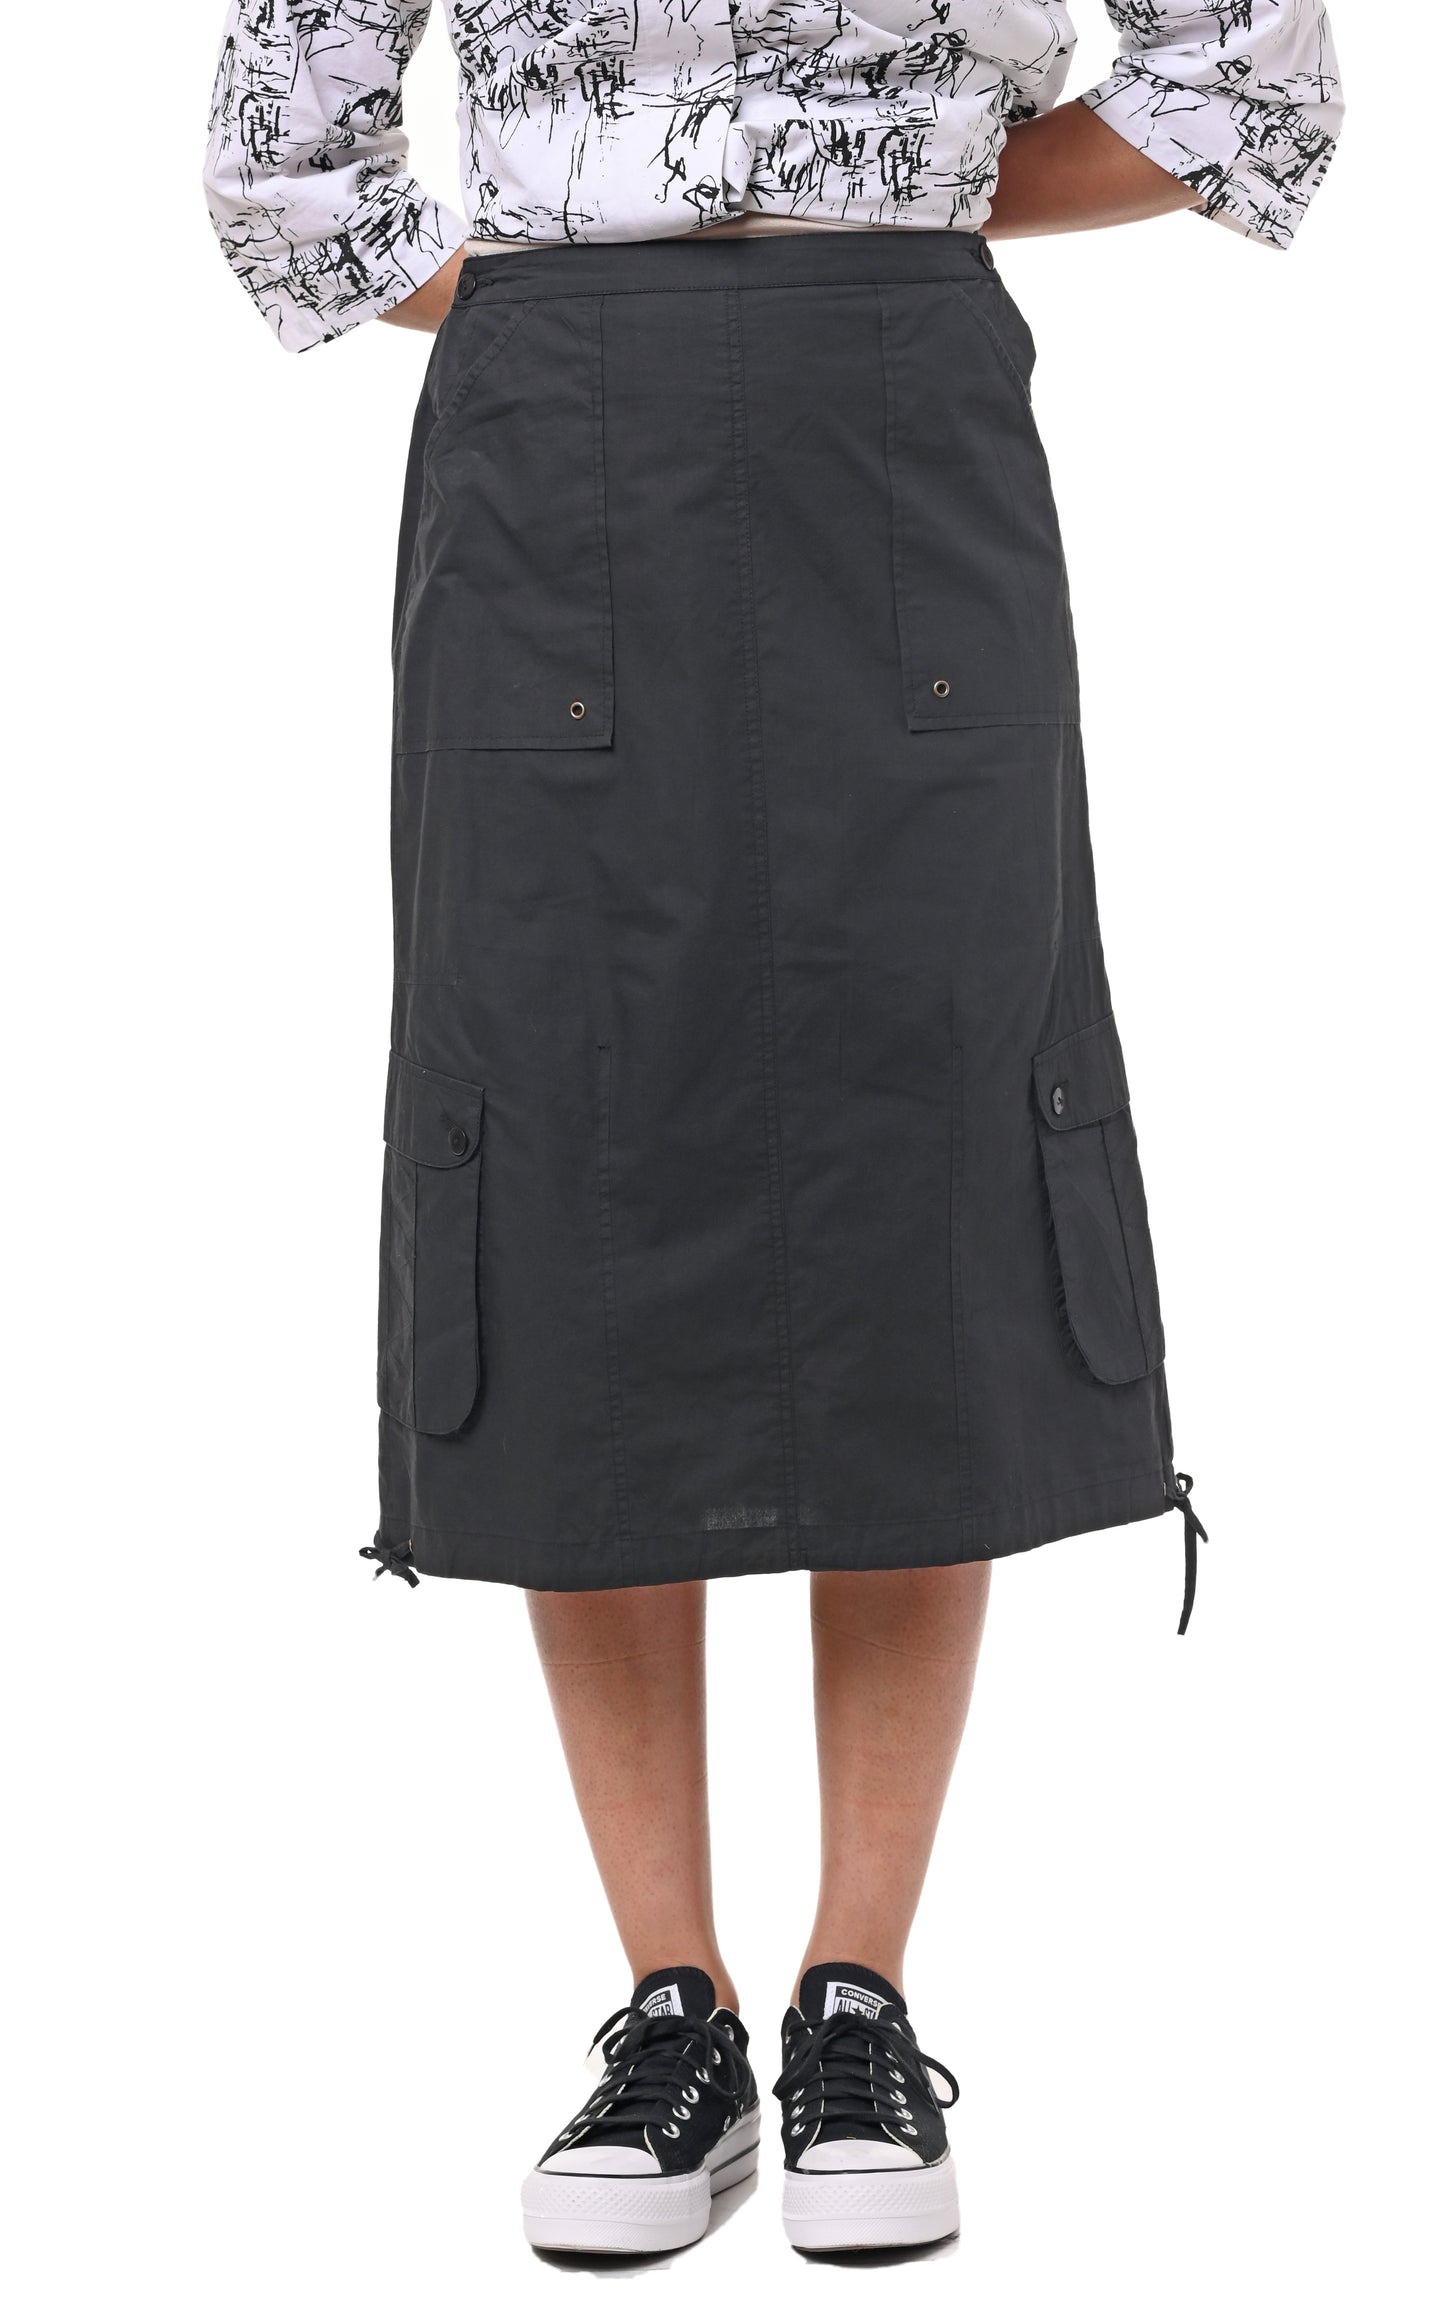 FINAL SALE SDC441 Hartley Skirt in Black*